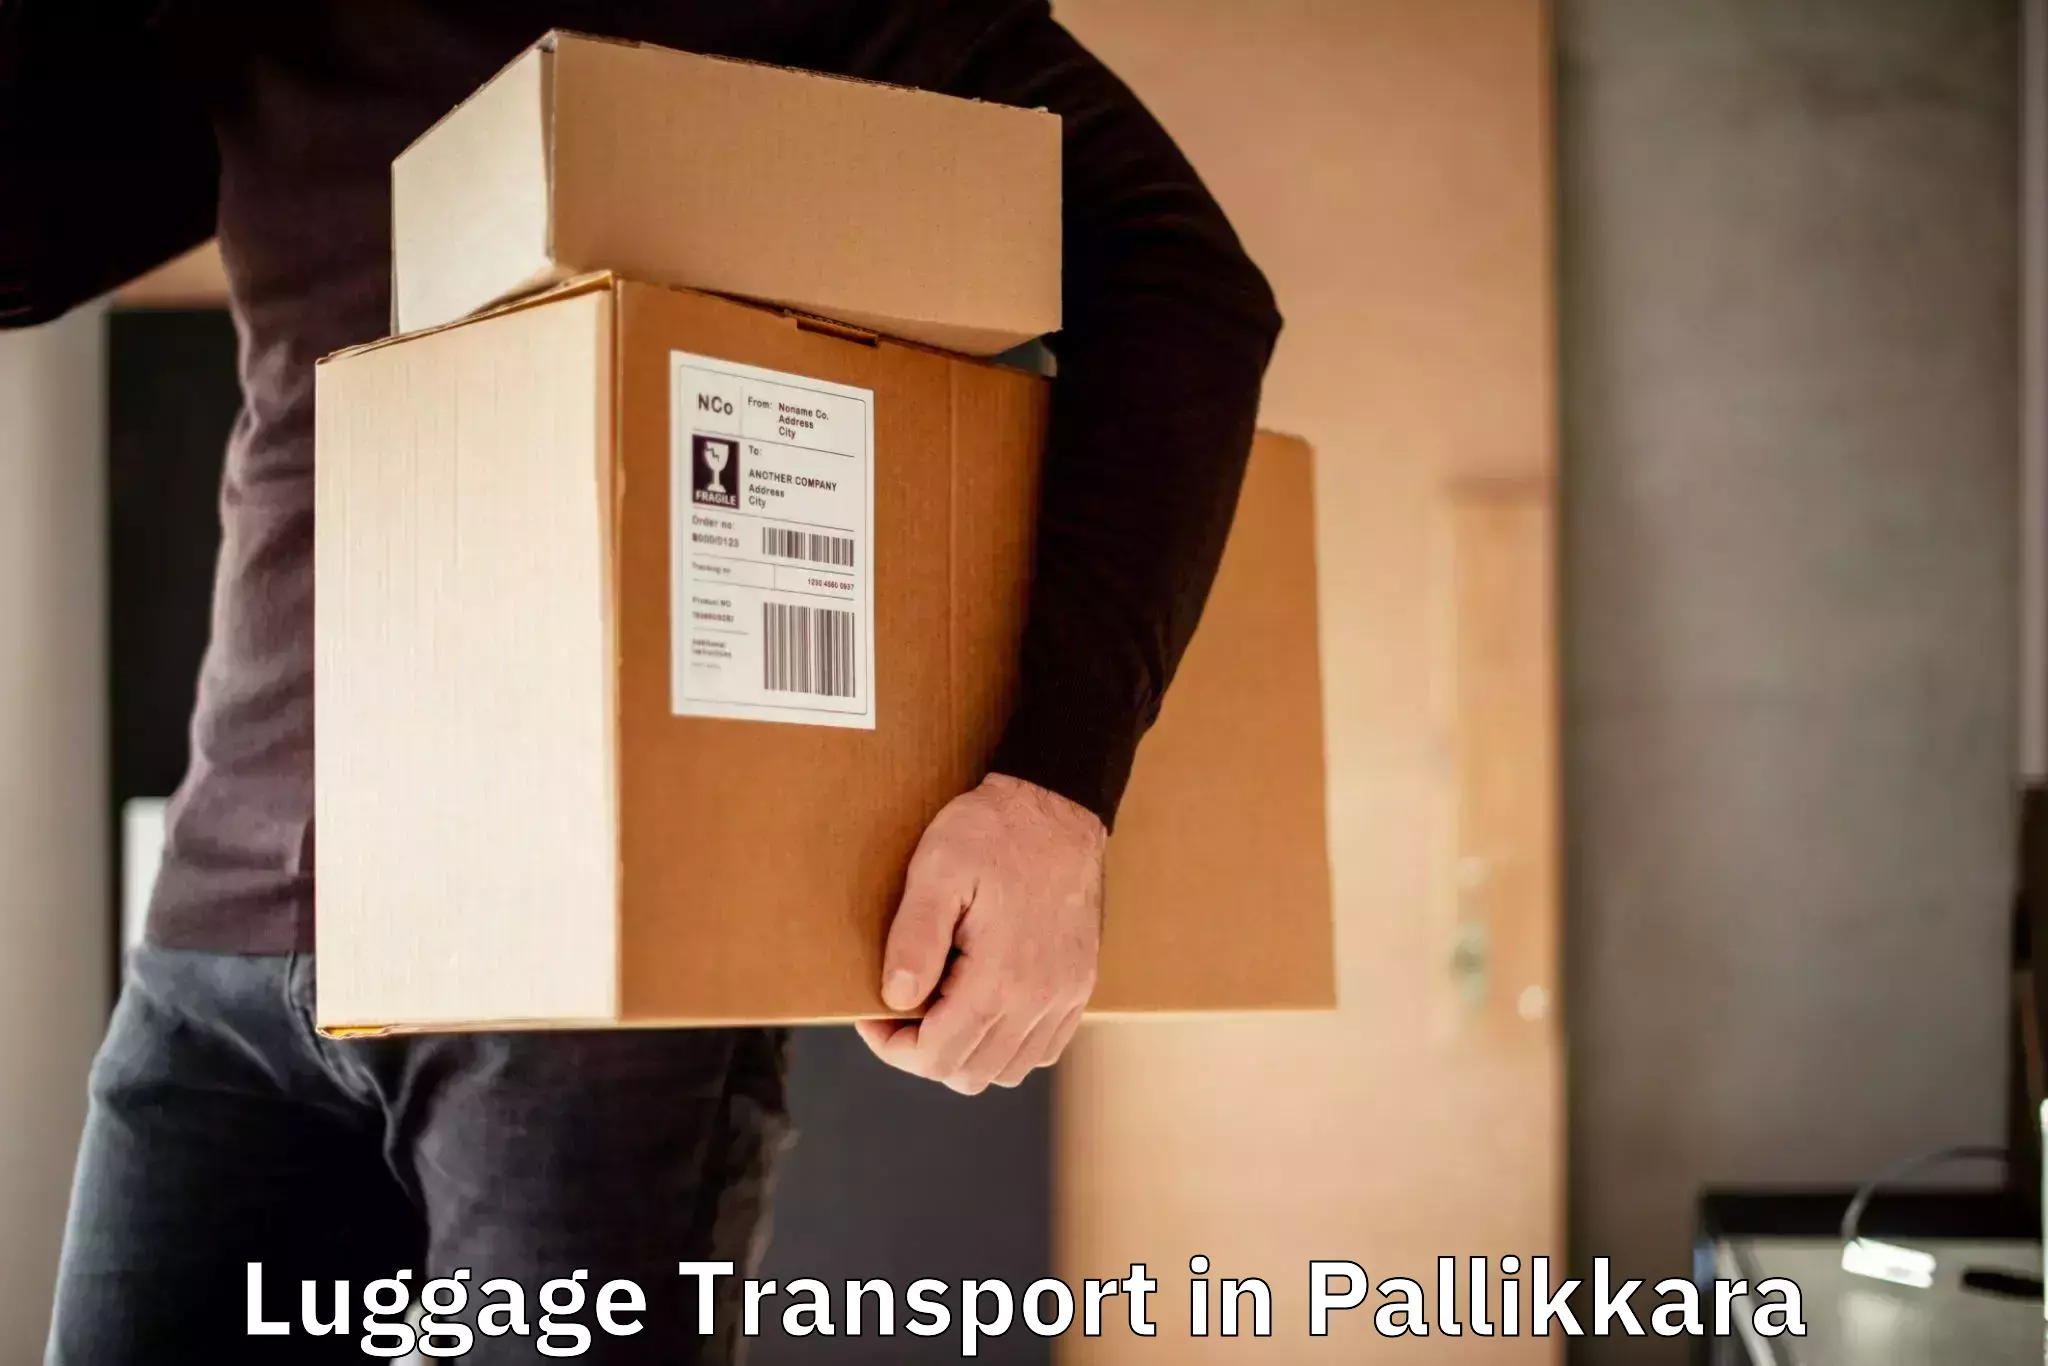 Luggage shipment tracking in Pallikkara